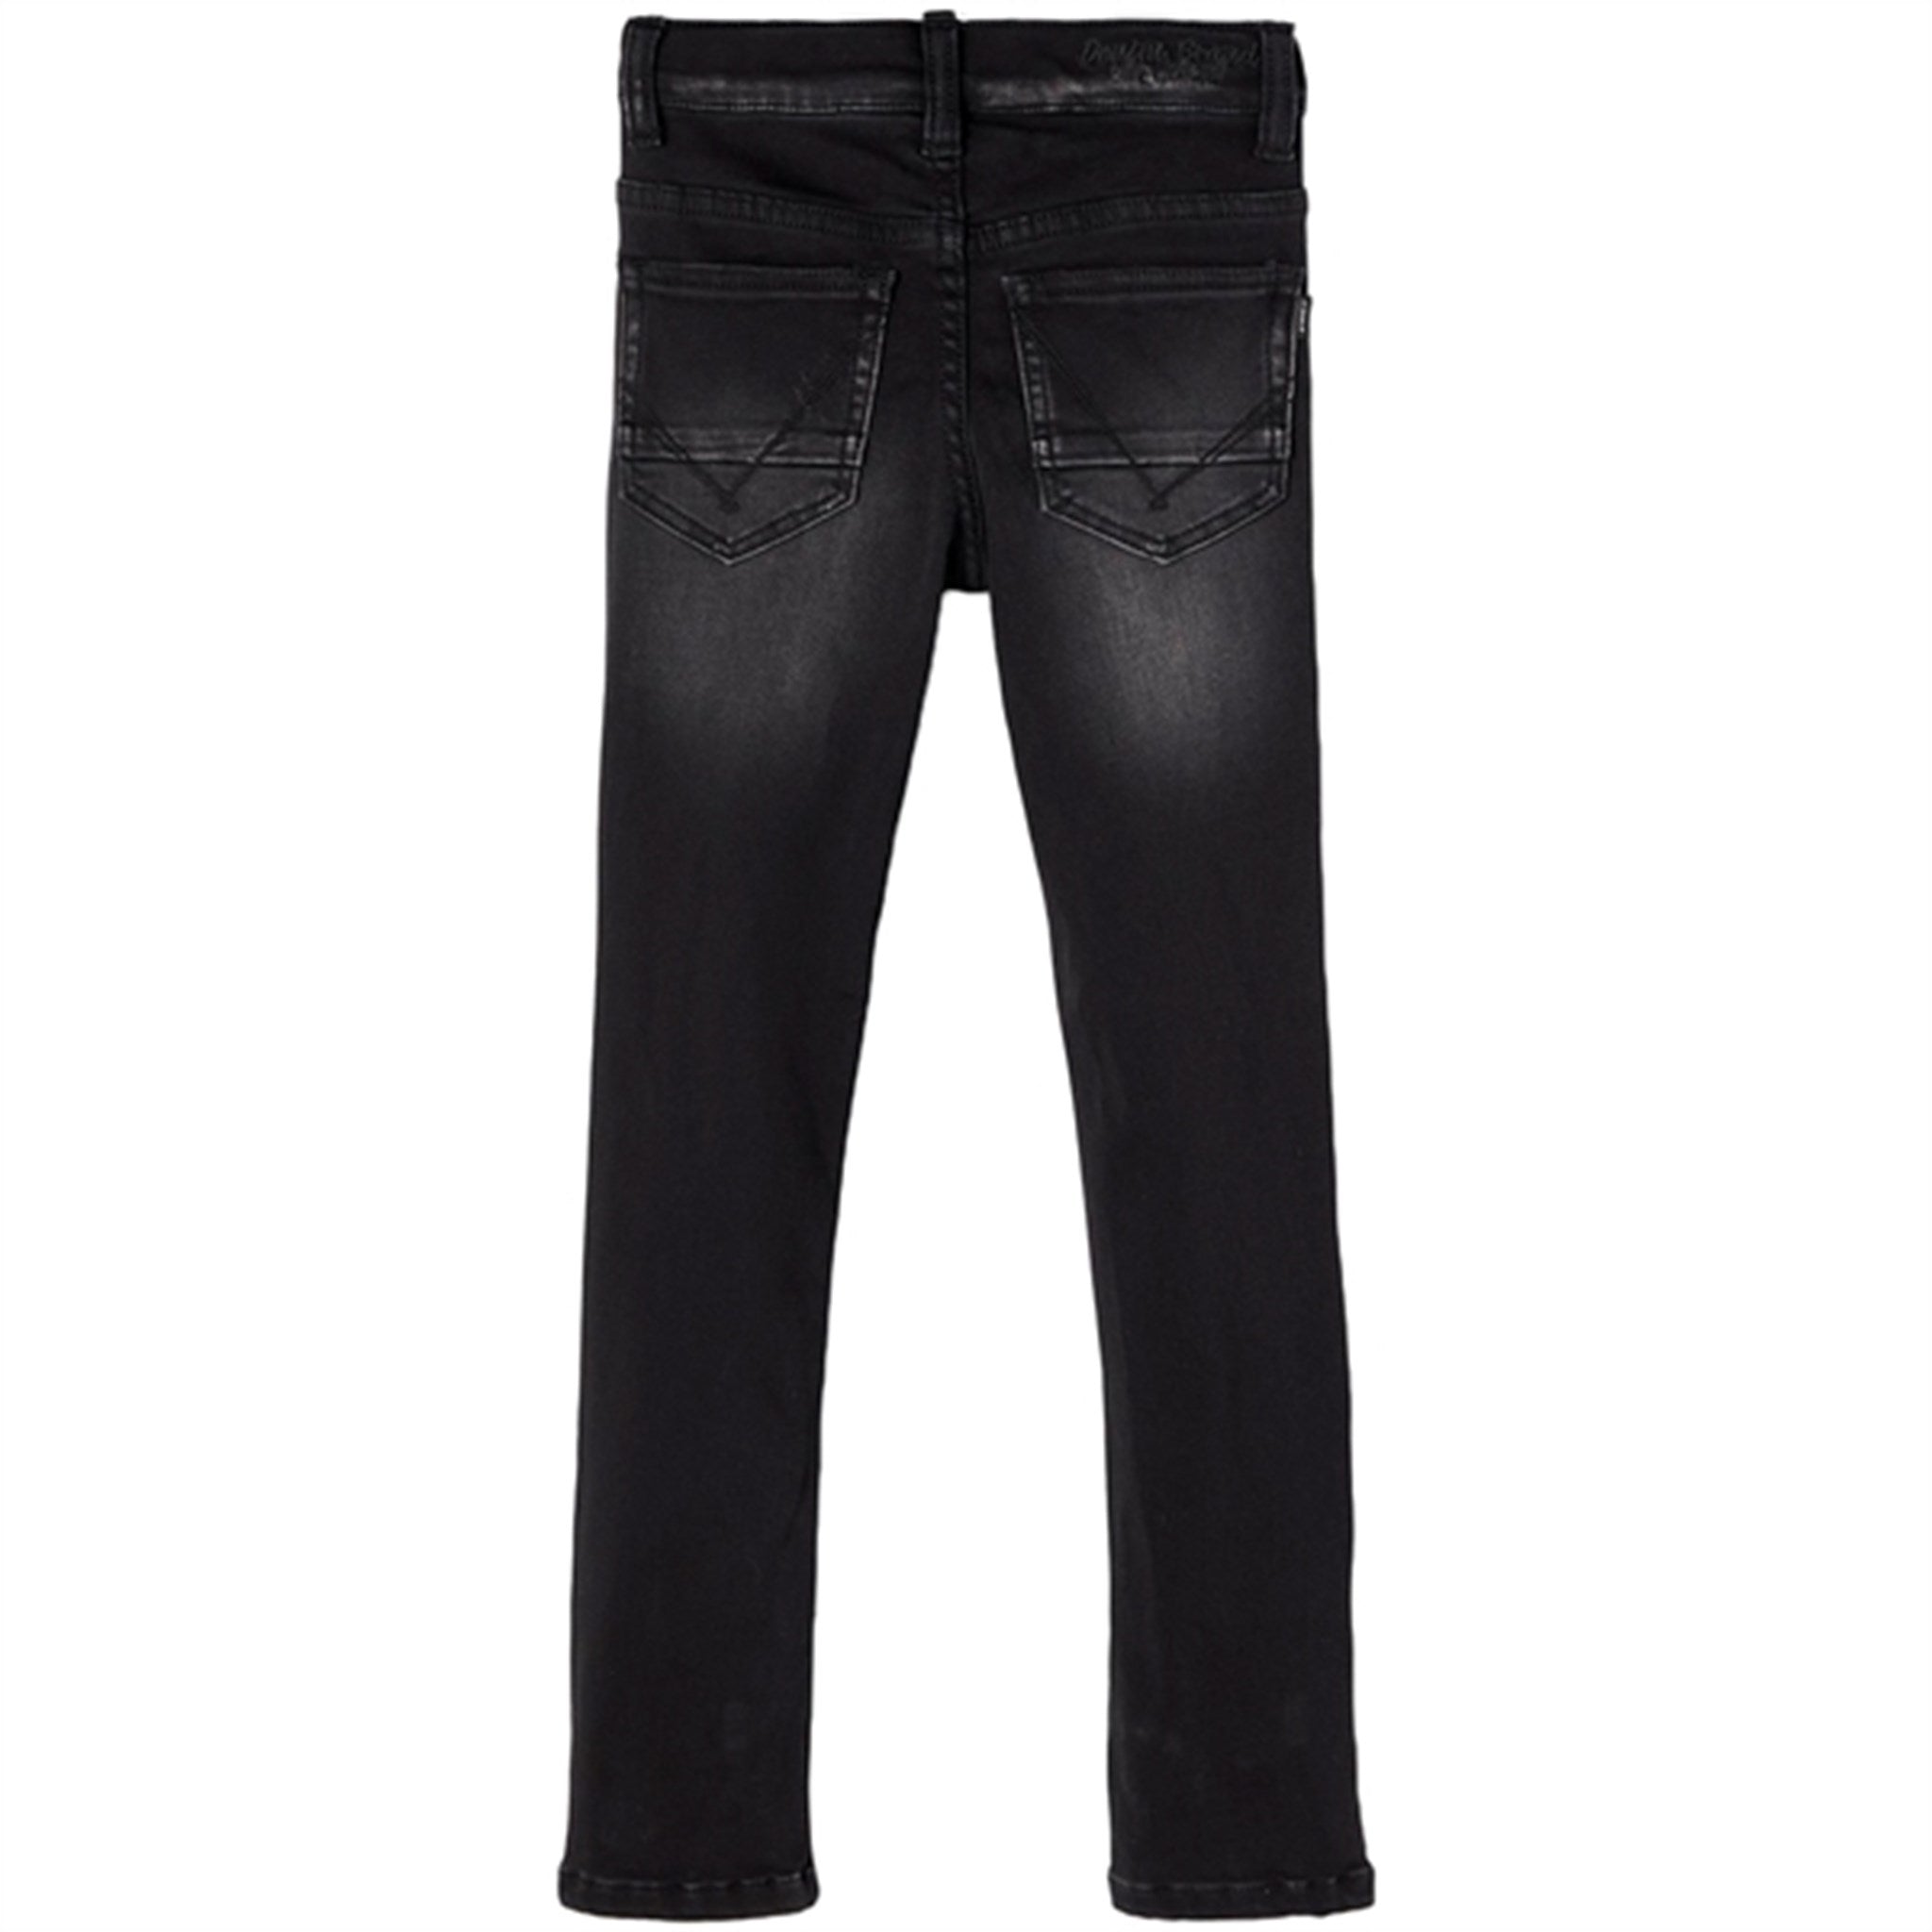 Name it Black Denim Theo X-slim NOOS Jeans 4